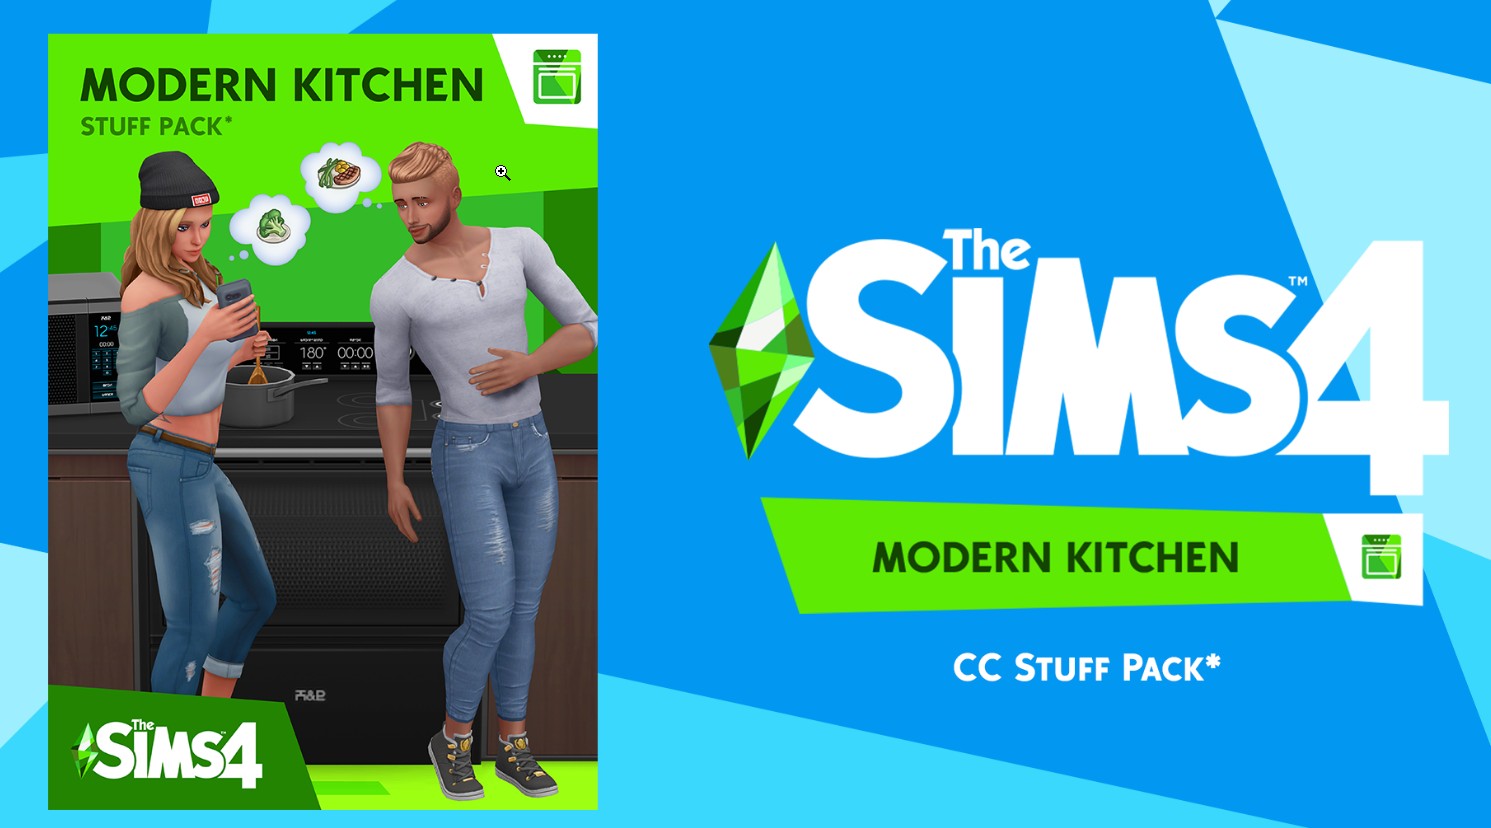 Custom Stuff Pack cover done in The Sims 4 art style. [Image via littledica]